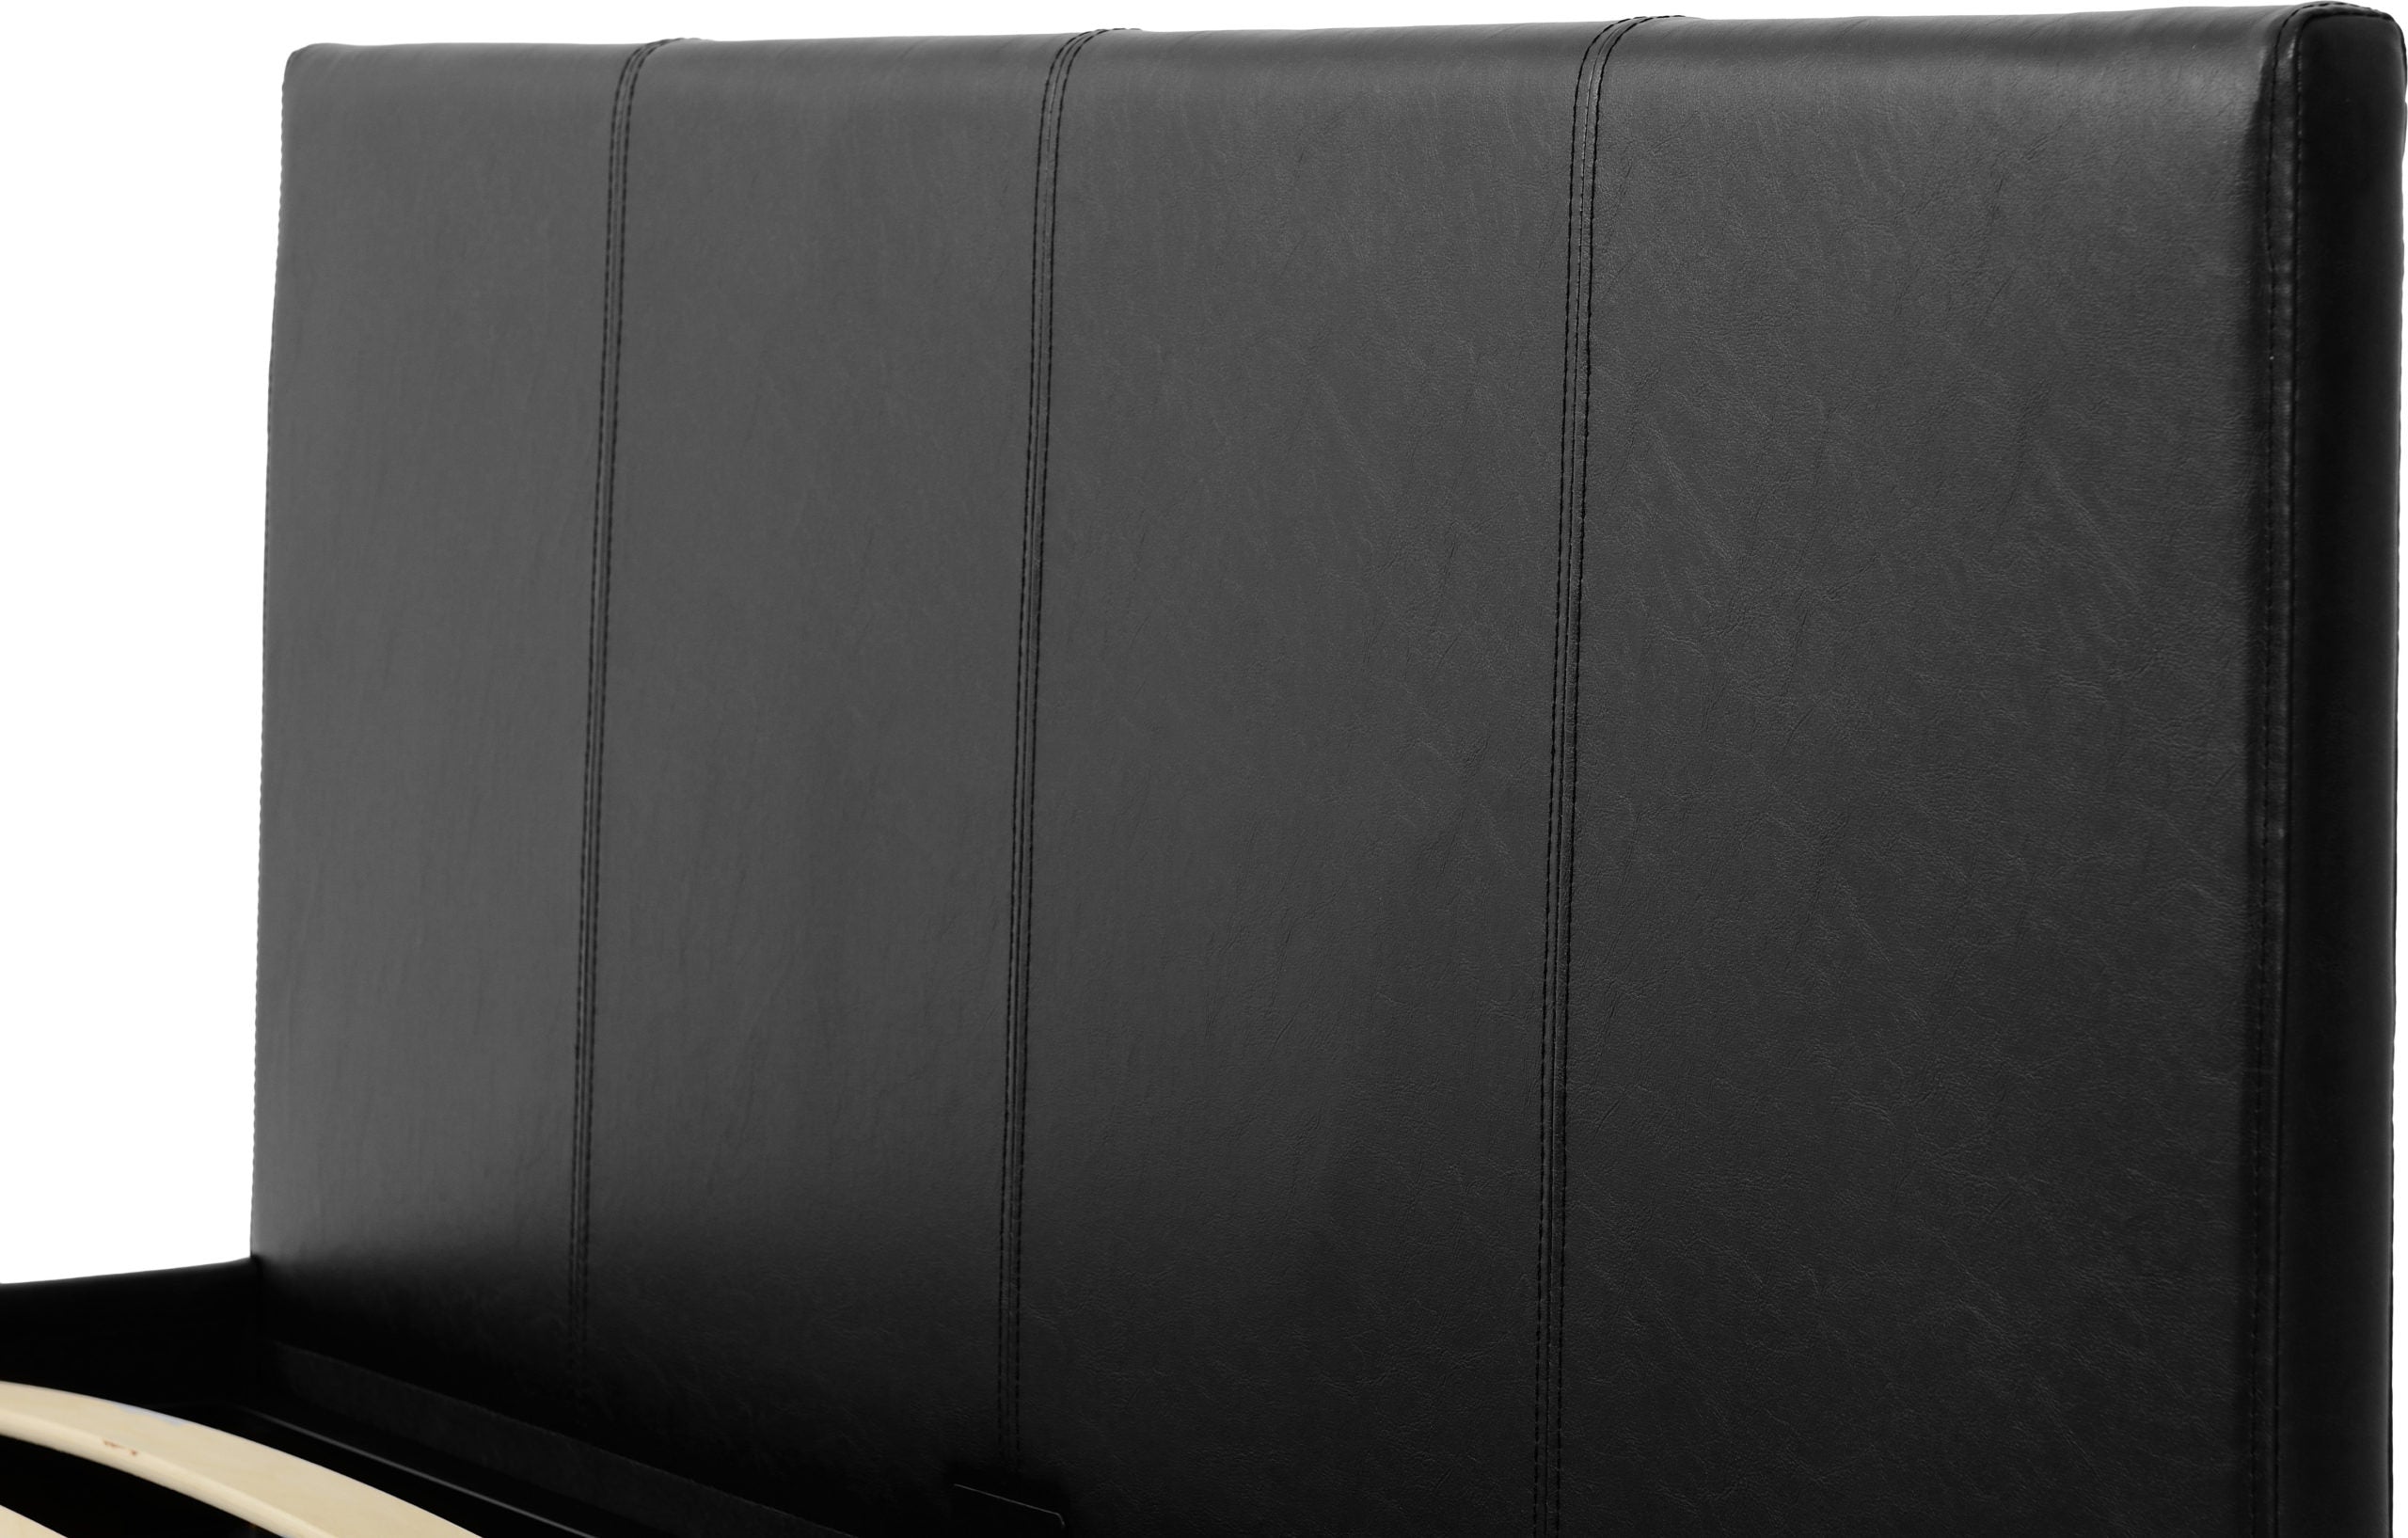 Waverley 4' Storage Bed Black Faux Leather